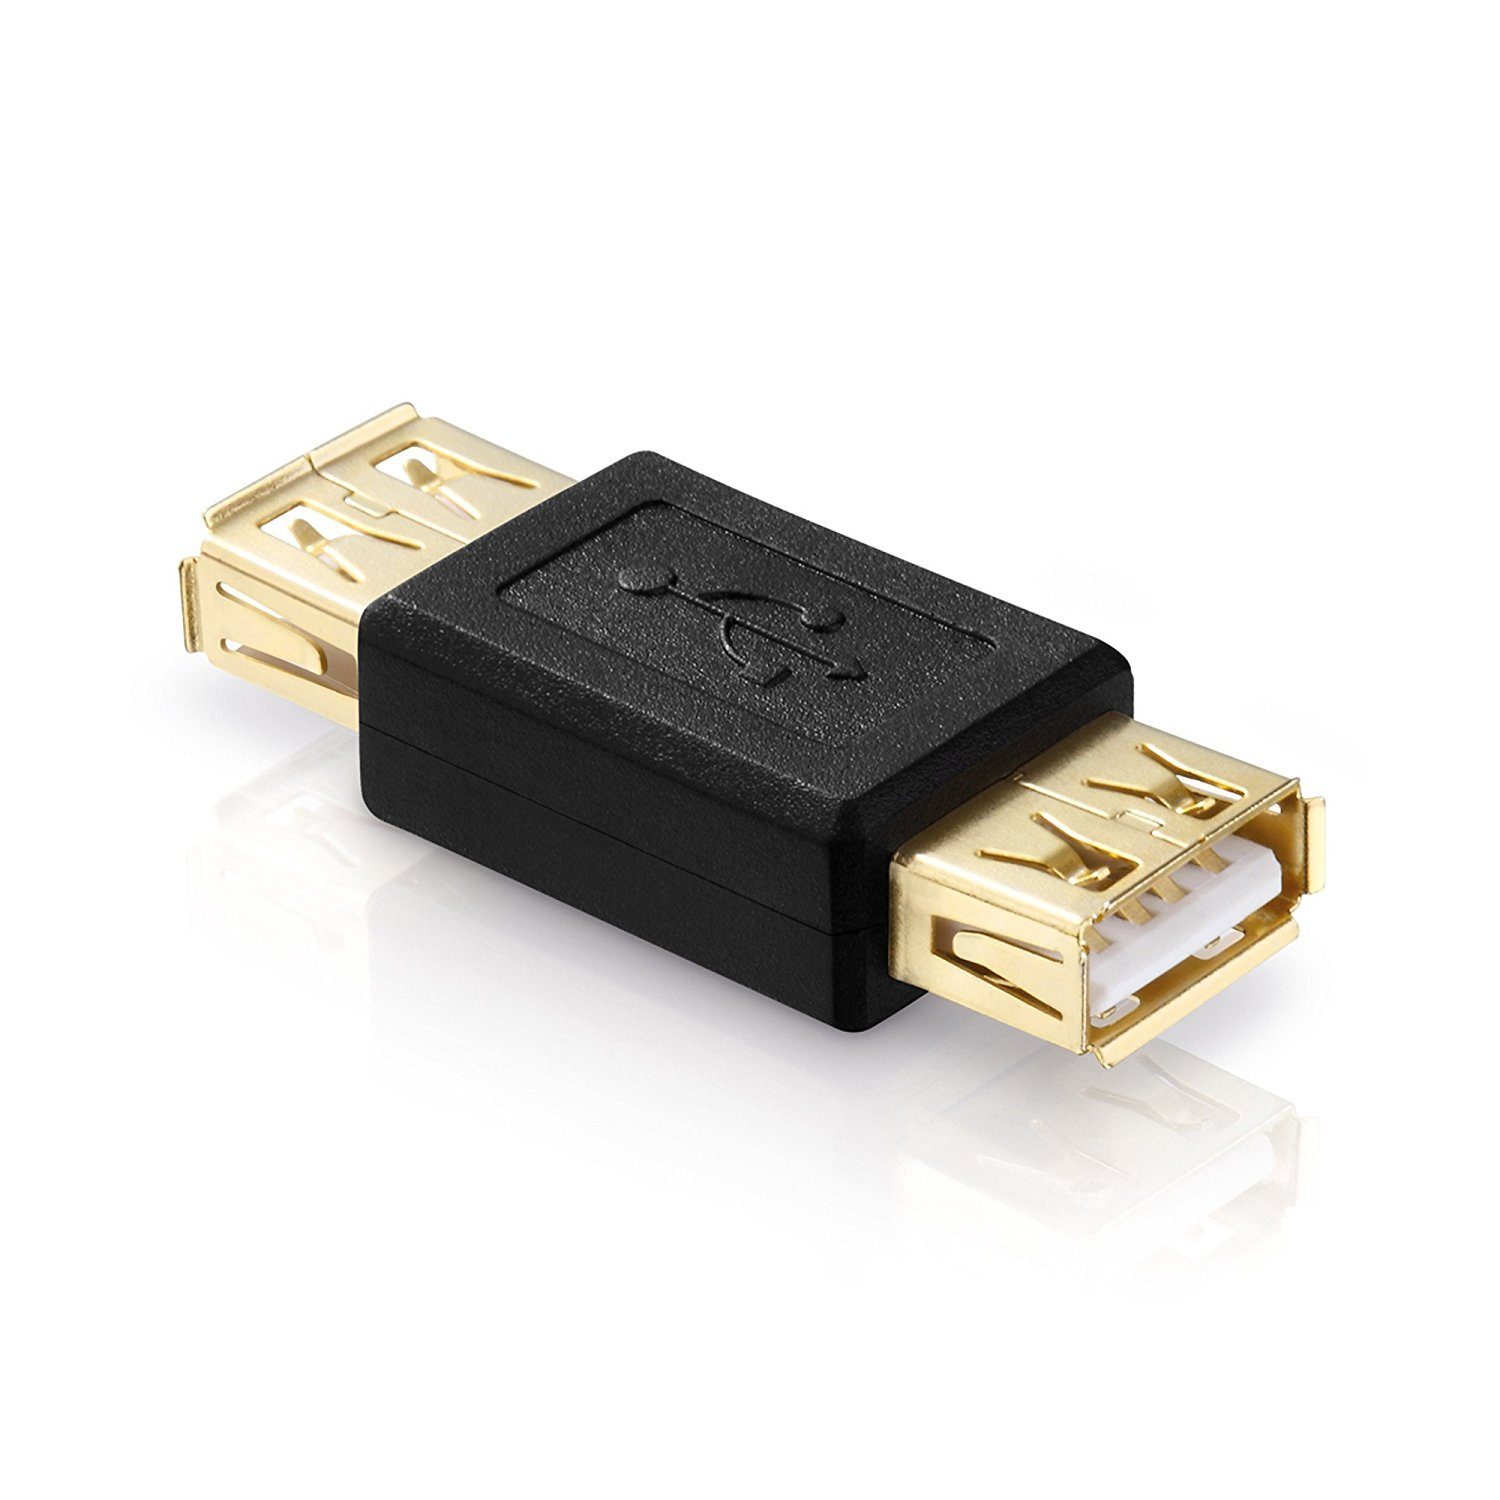 adaptare adaptare 41016 USB 2.0-Adapter A-Buchse auf A-Buchse